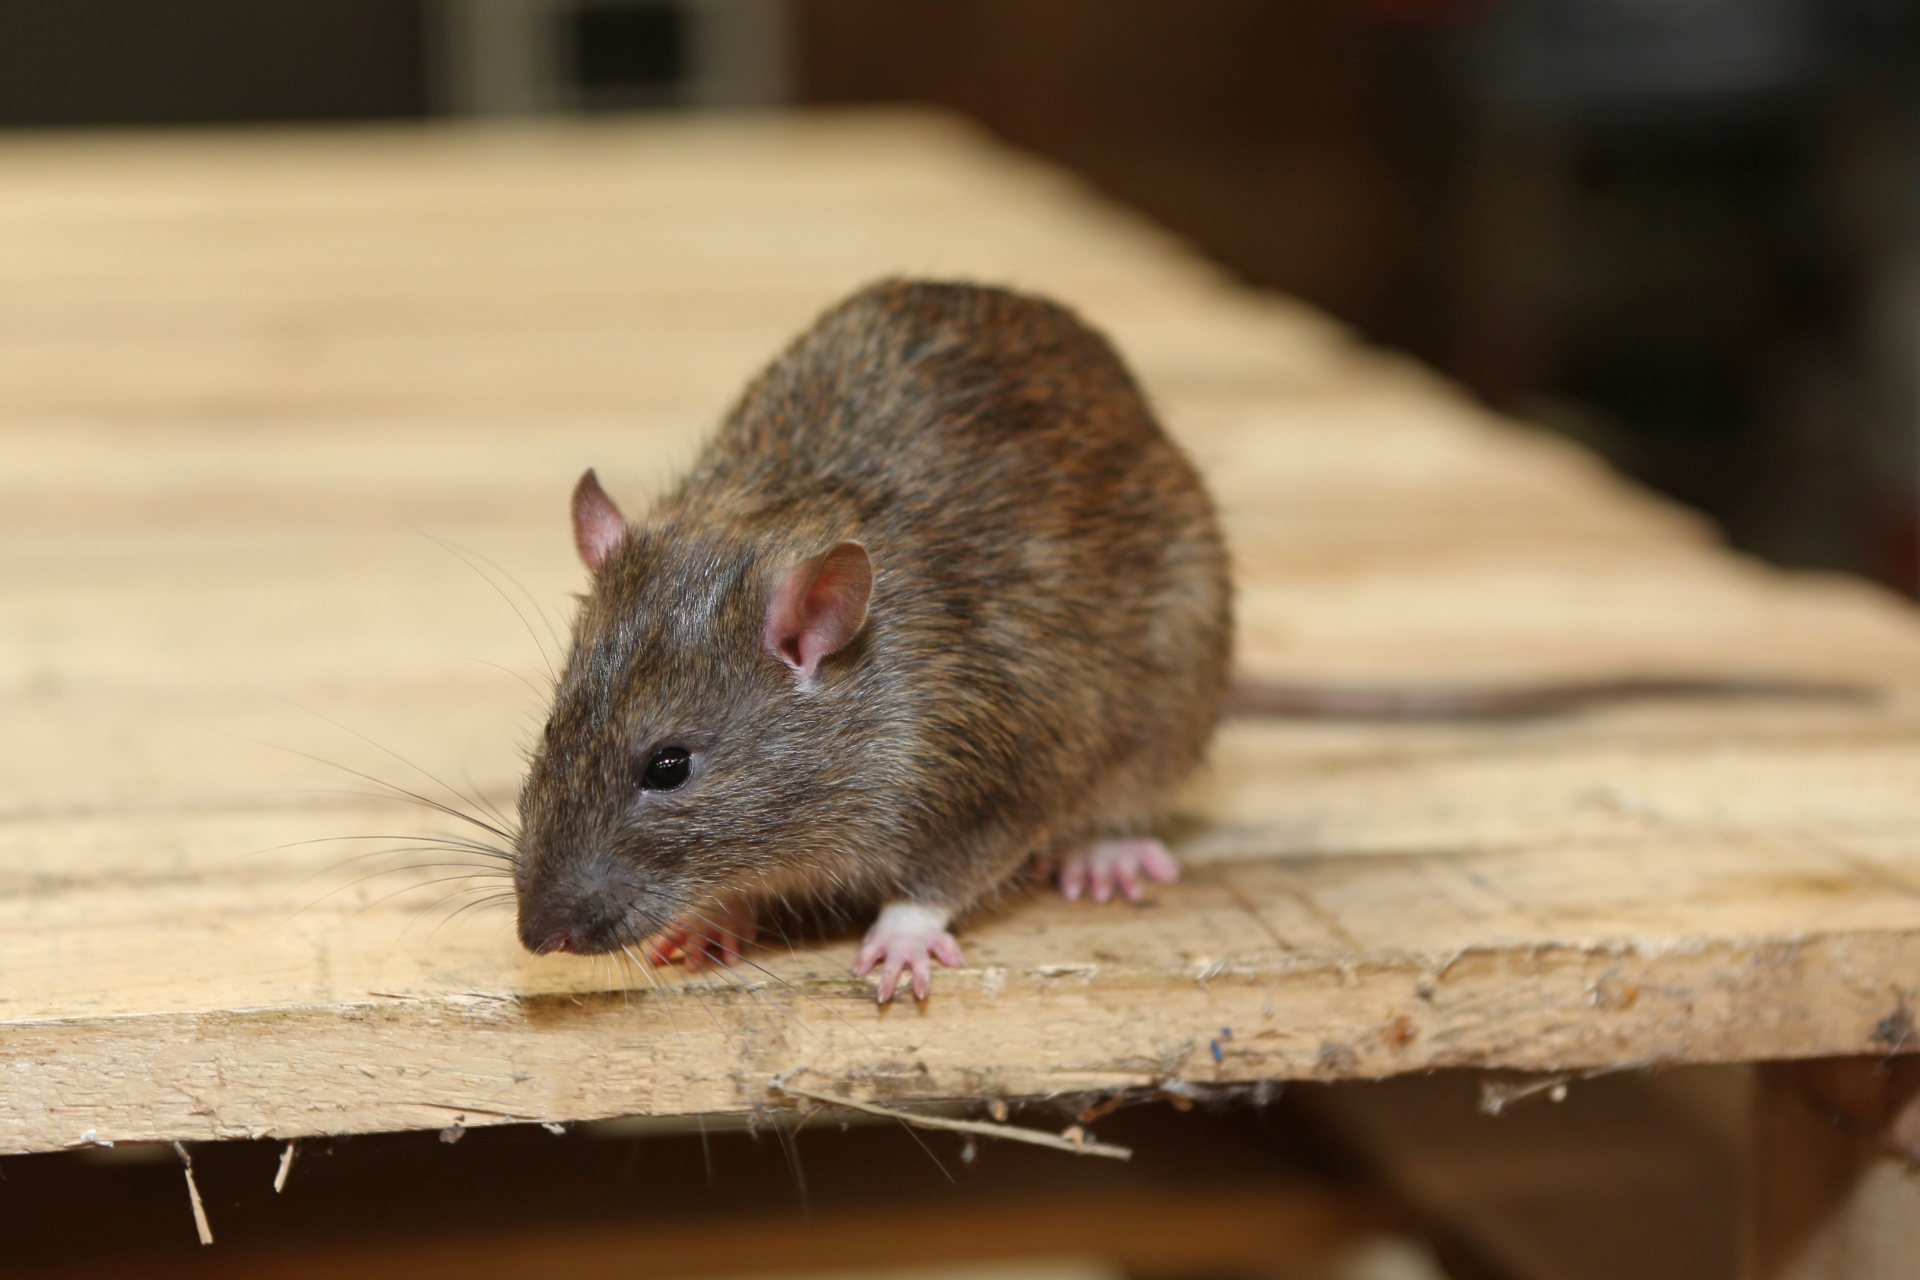 Rat extermination, Pest Control in Fulham, SW6. Call Now 020 8166 9746